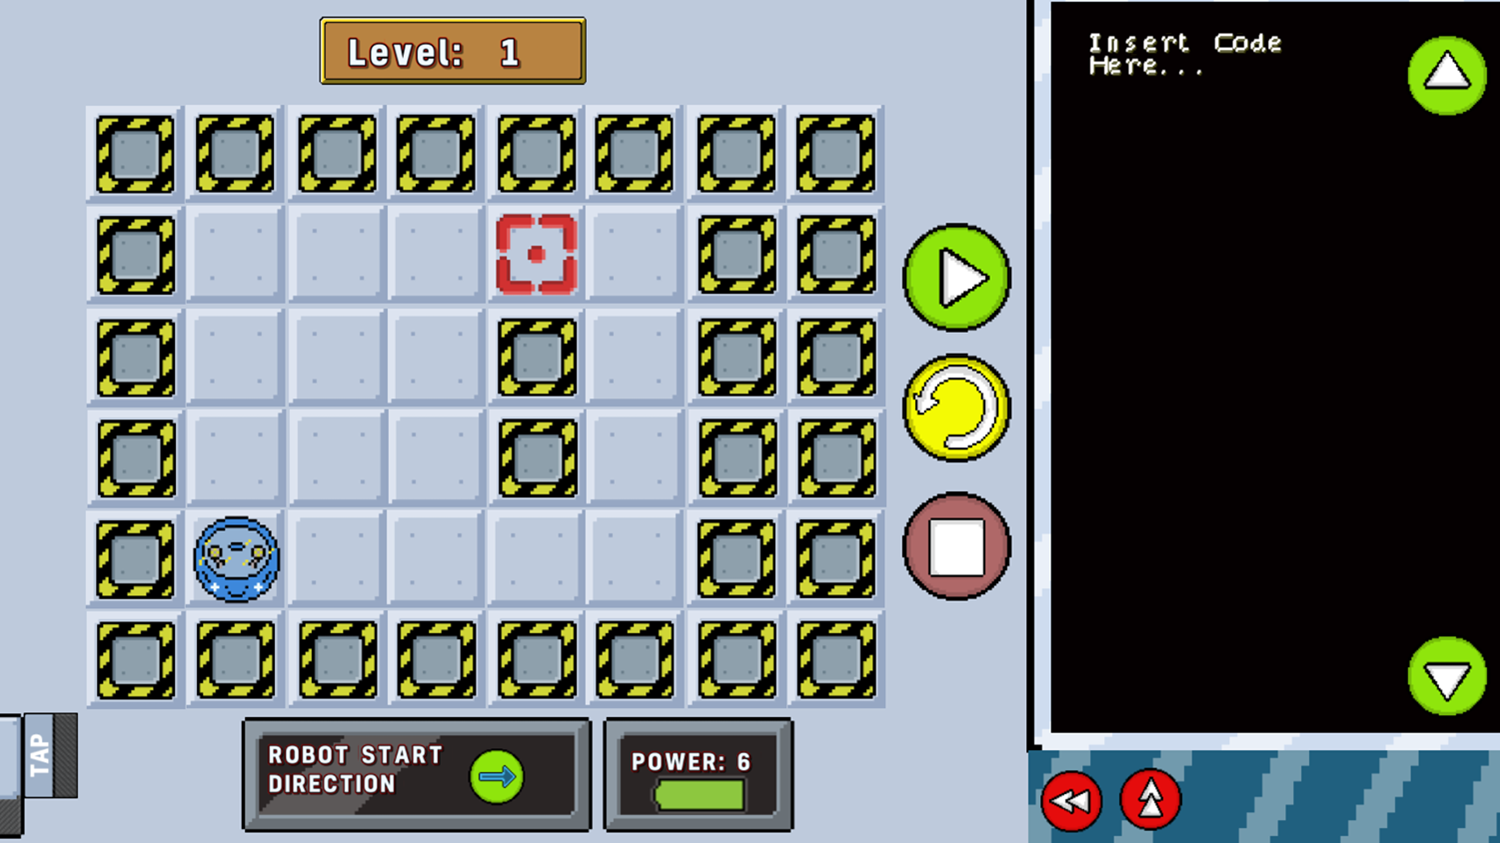 Rubi's Coding Class Game Start Screenshot.